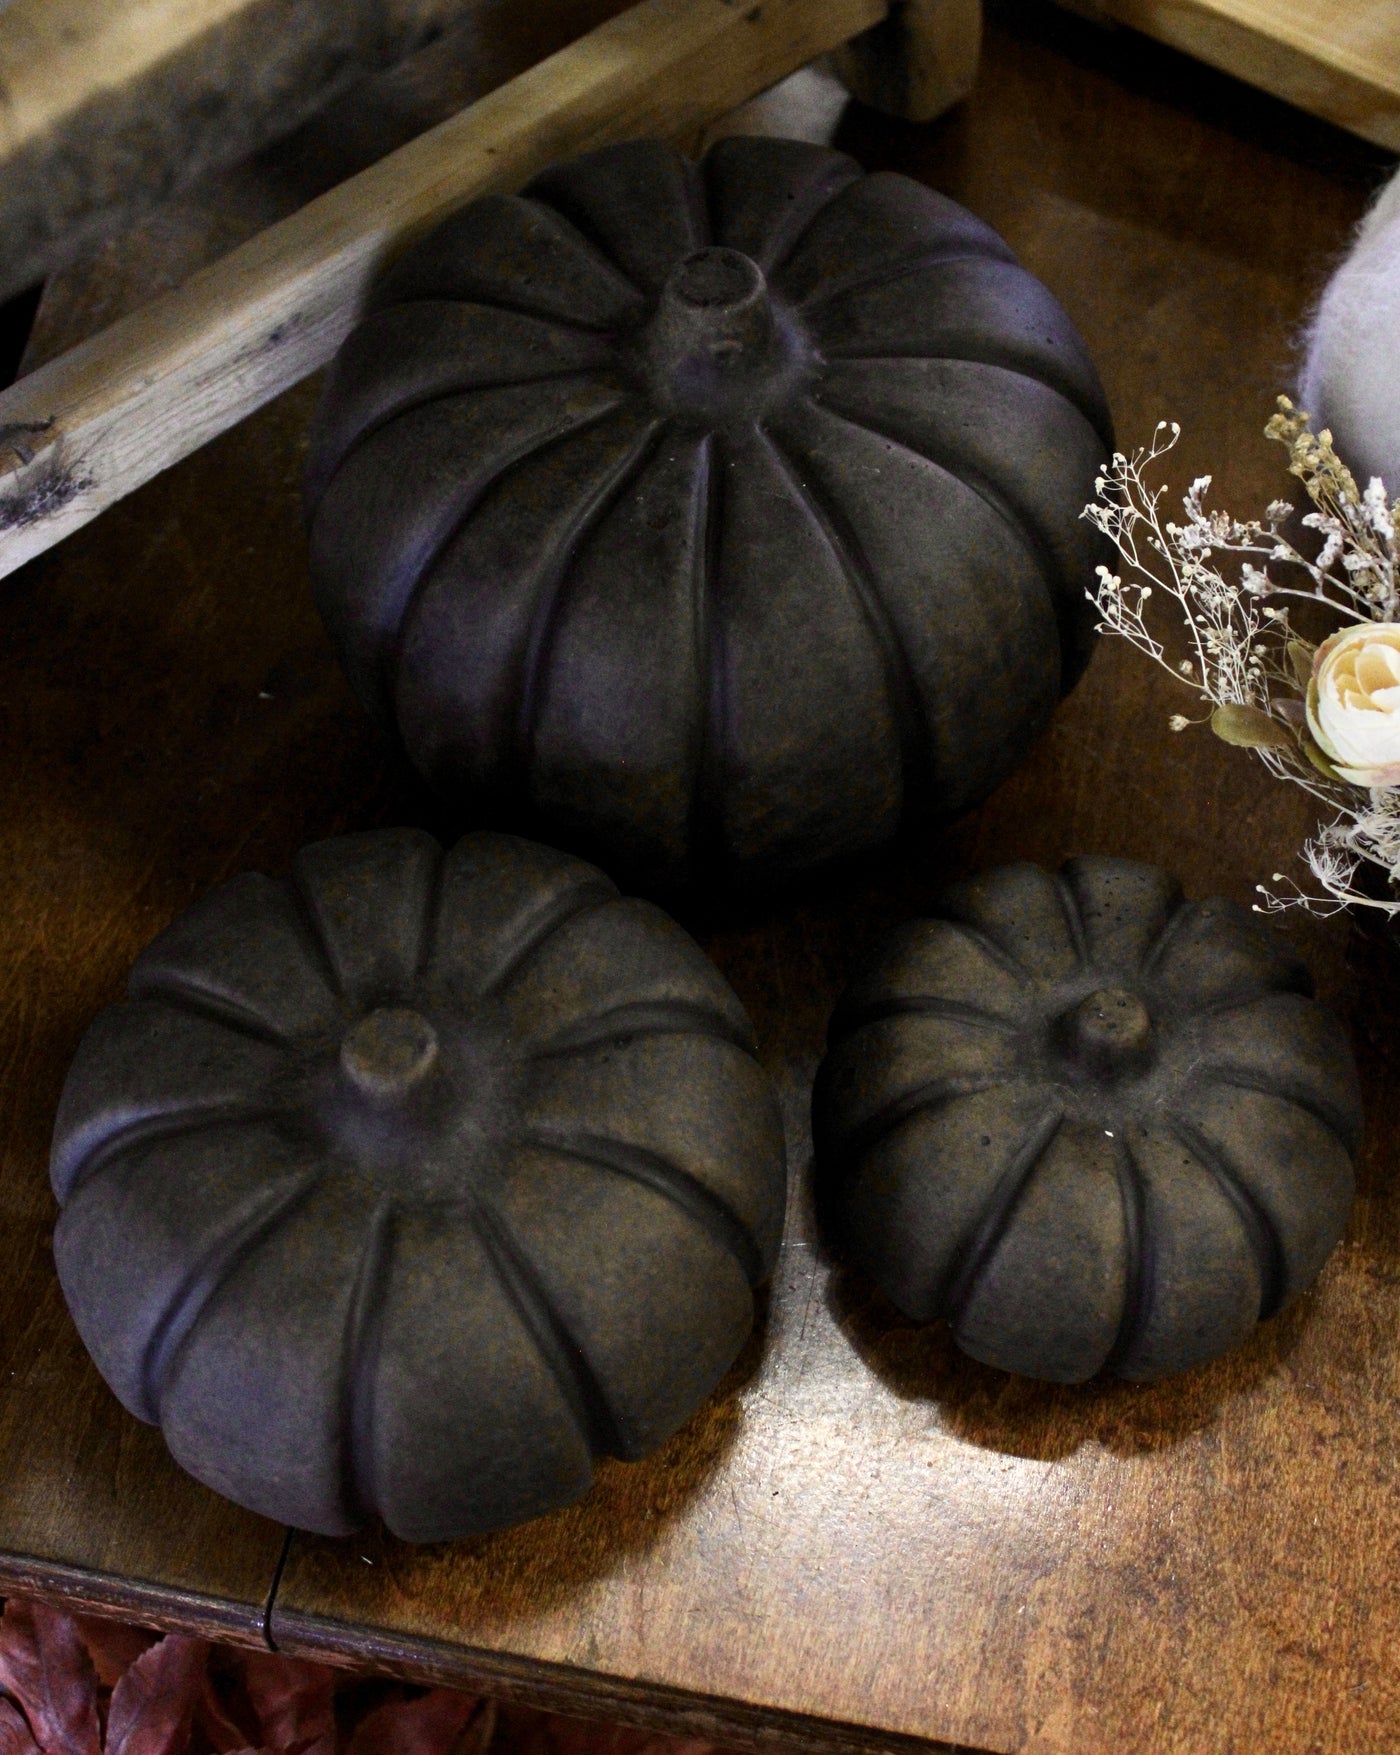 Ceramic Pumpkins